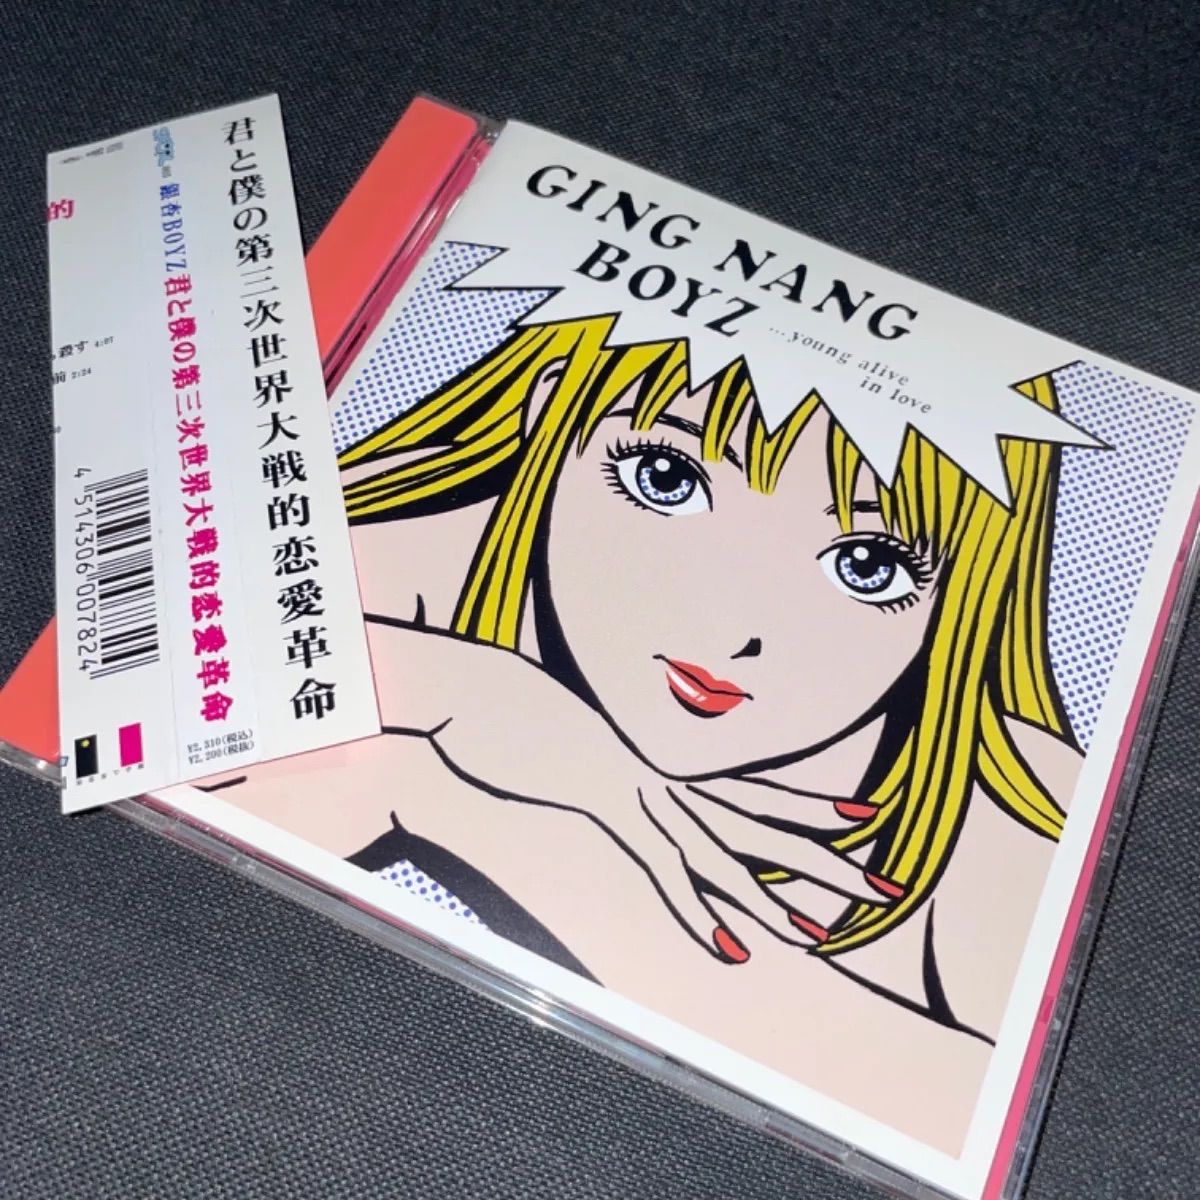 S1426) 銀杏BOYZ 君と僕の第三次世界大戦的恋愛革命 銀杏boyz CD